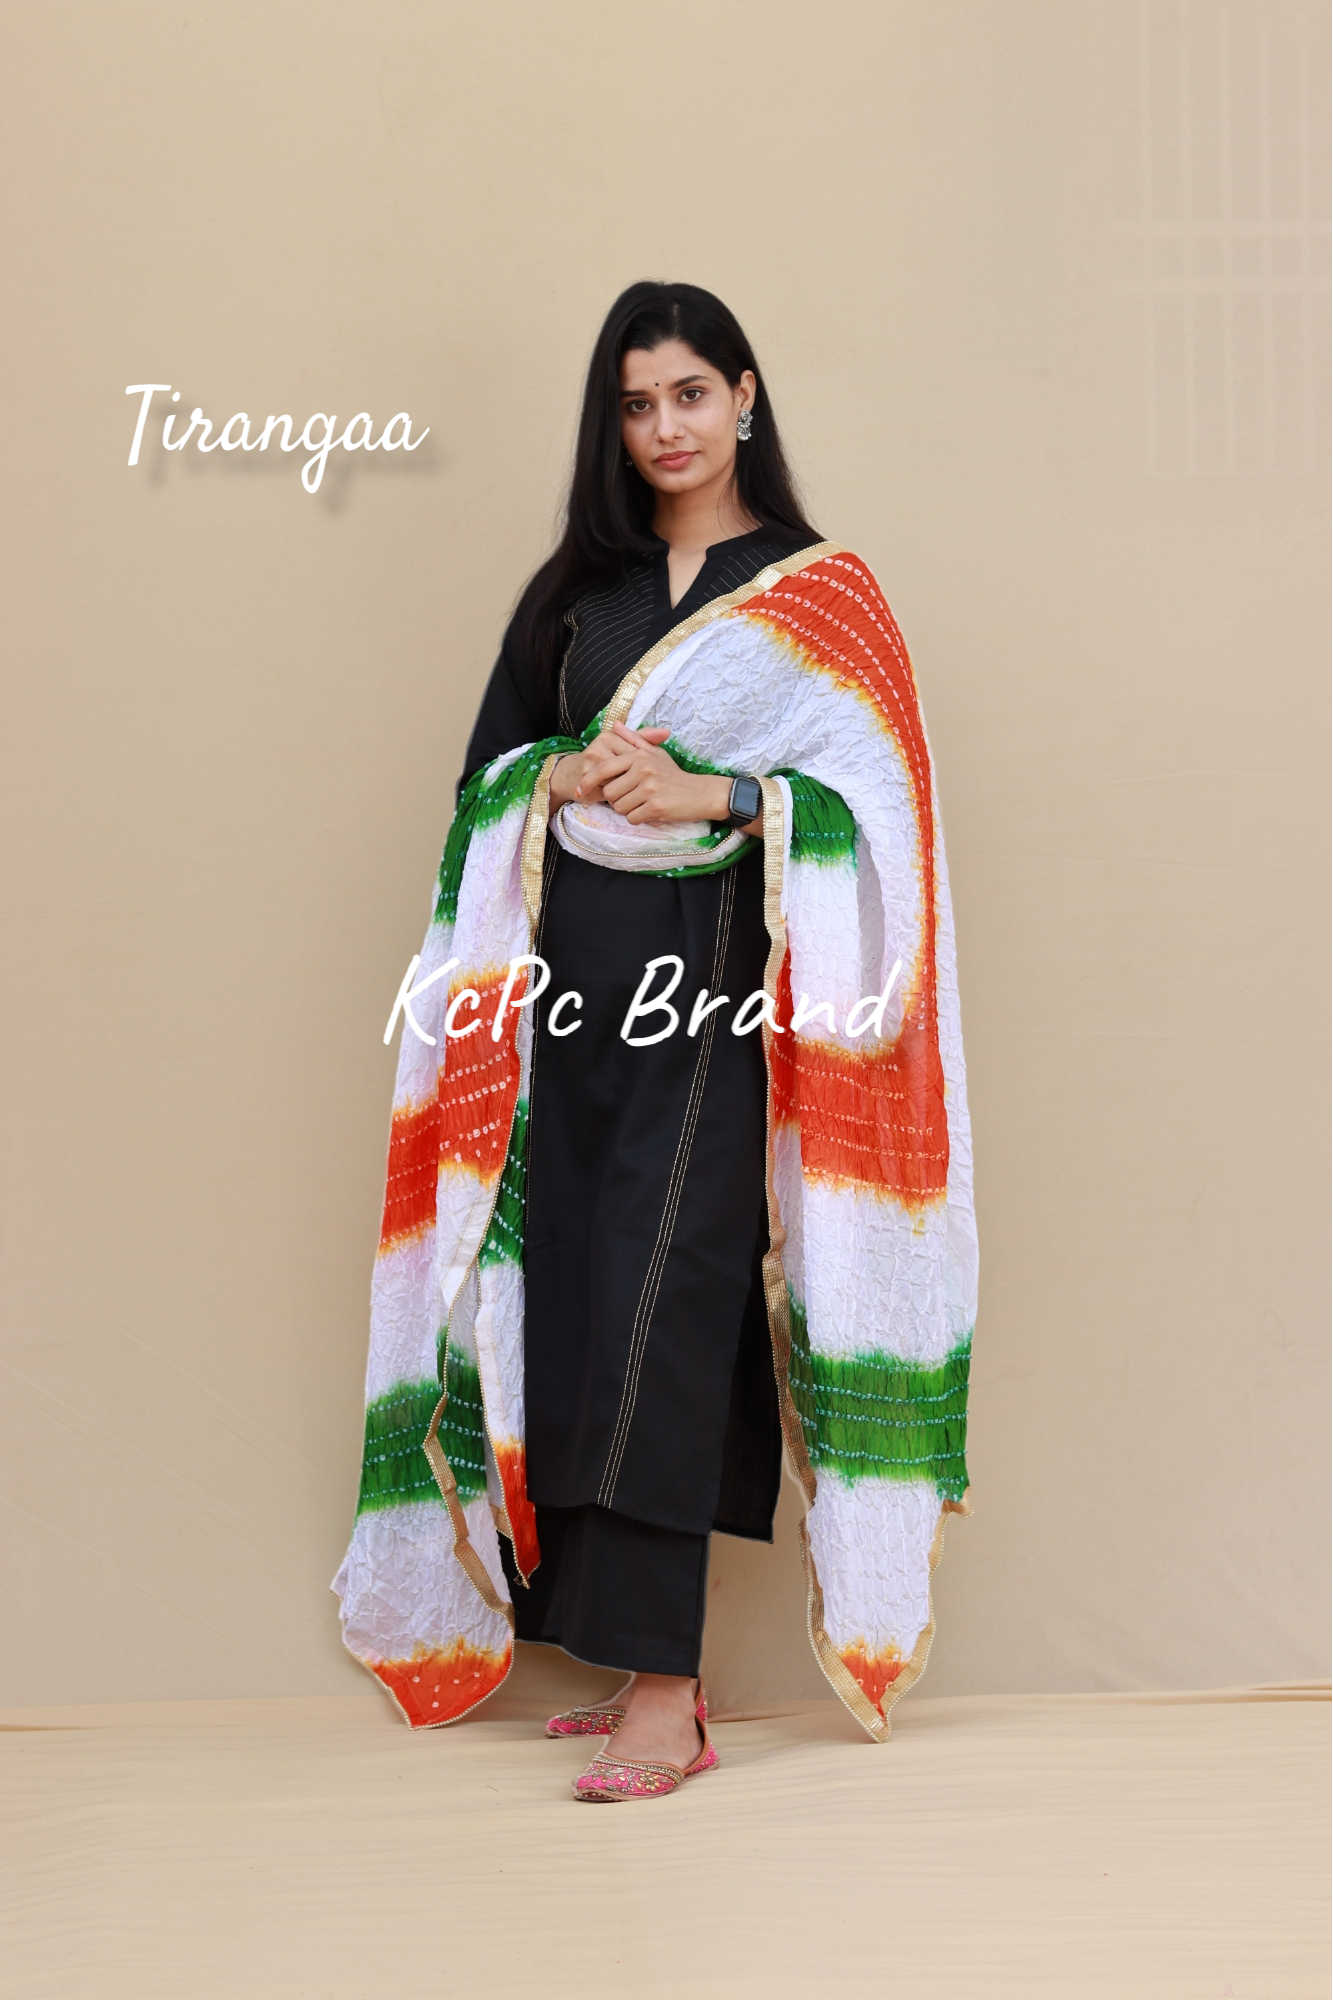 Tirangaa : Bandhani Tricolor dupatta